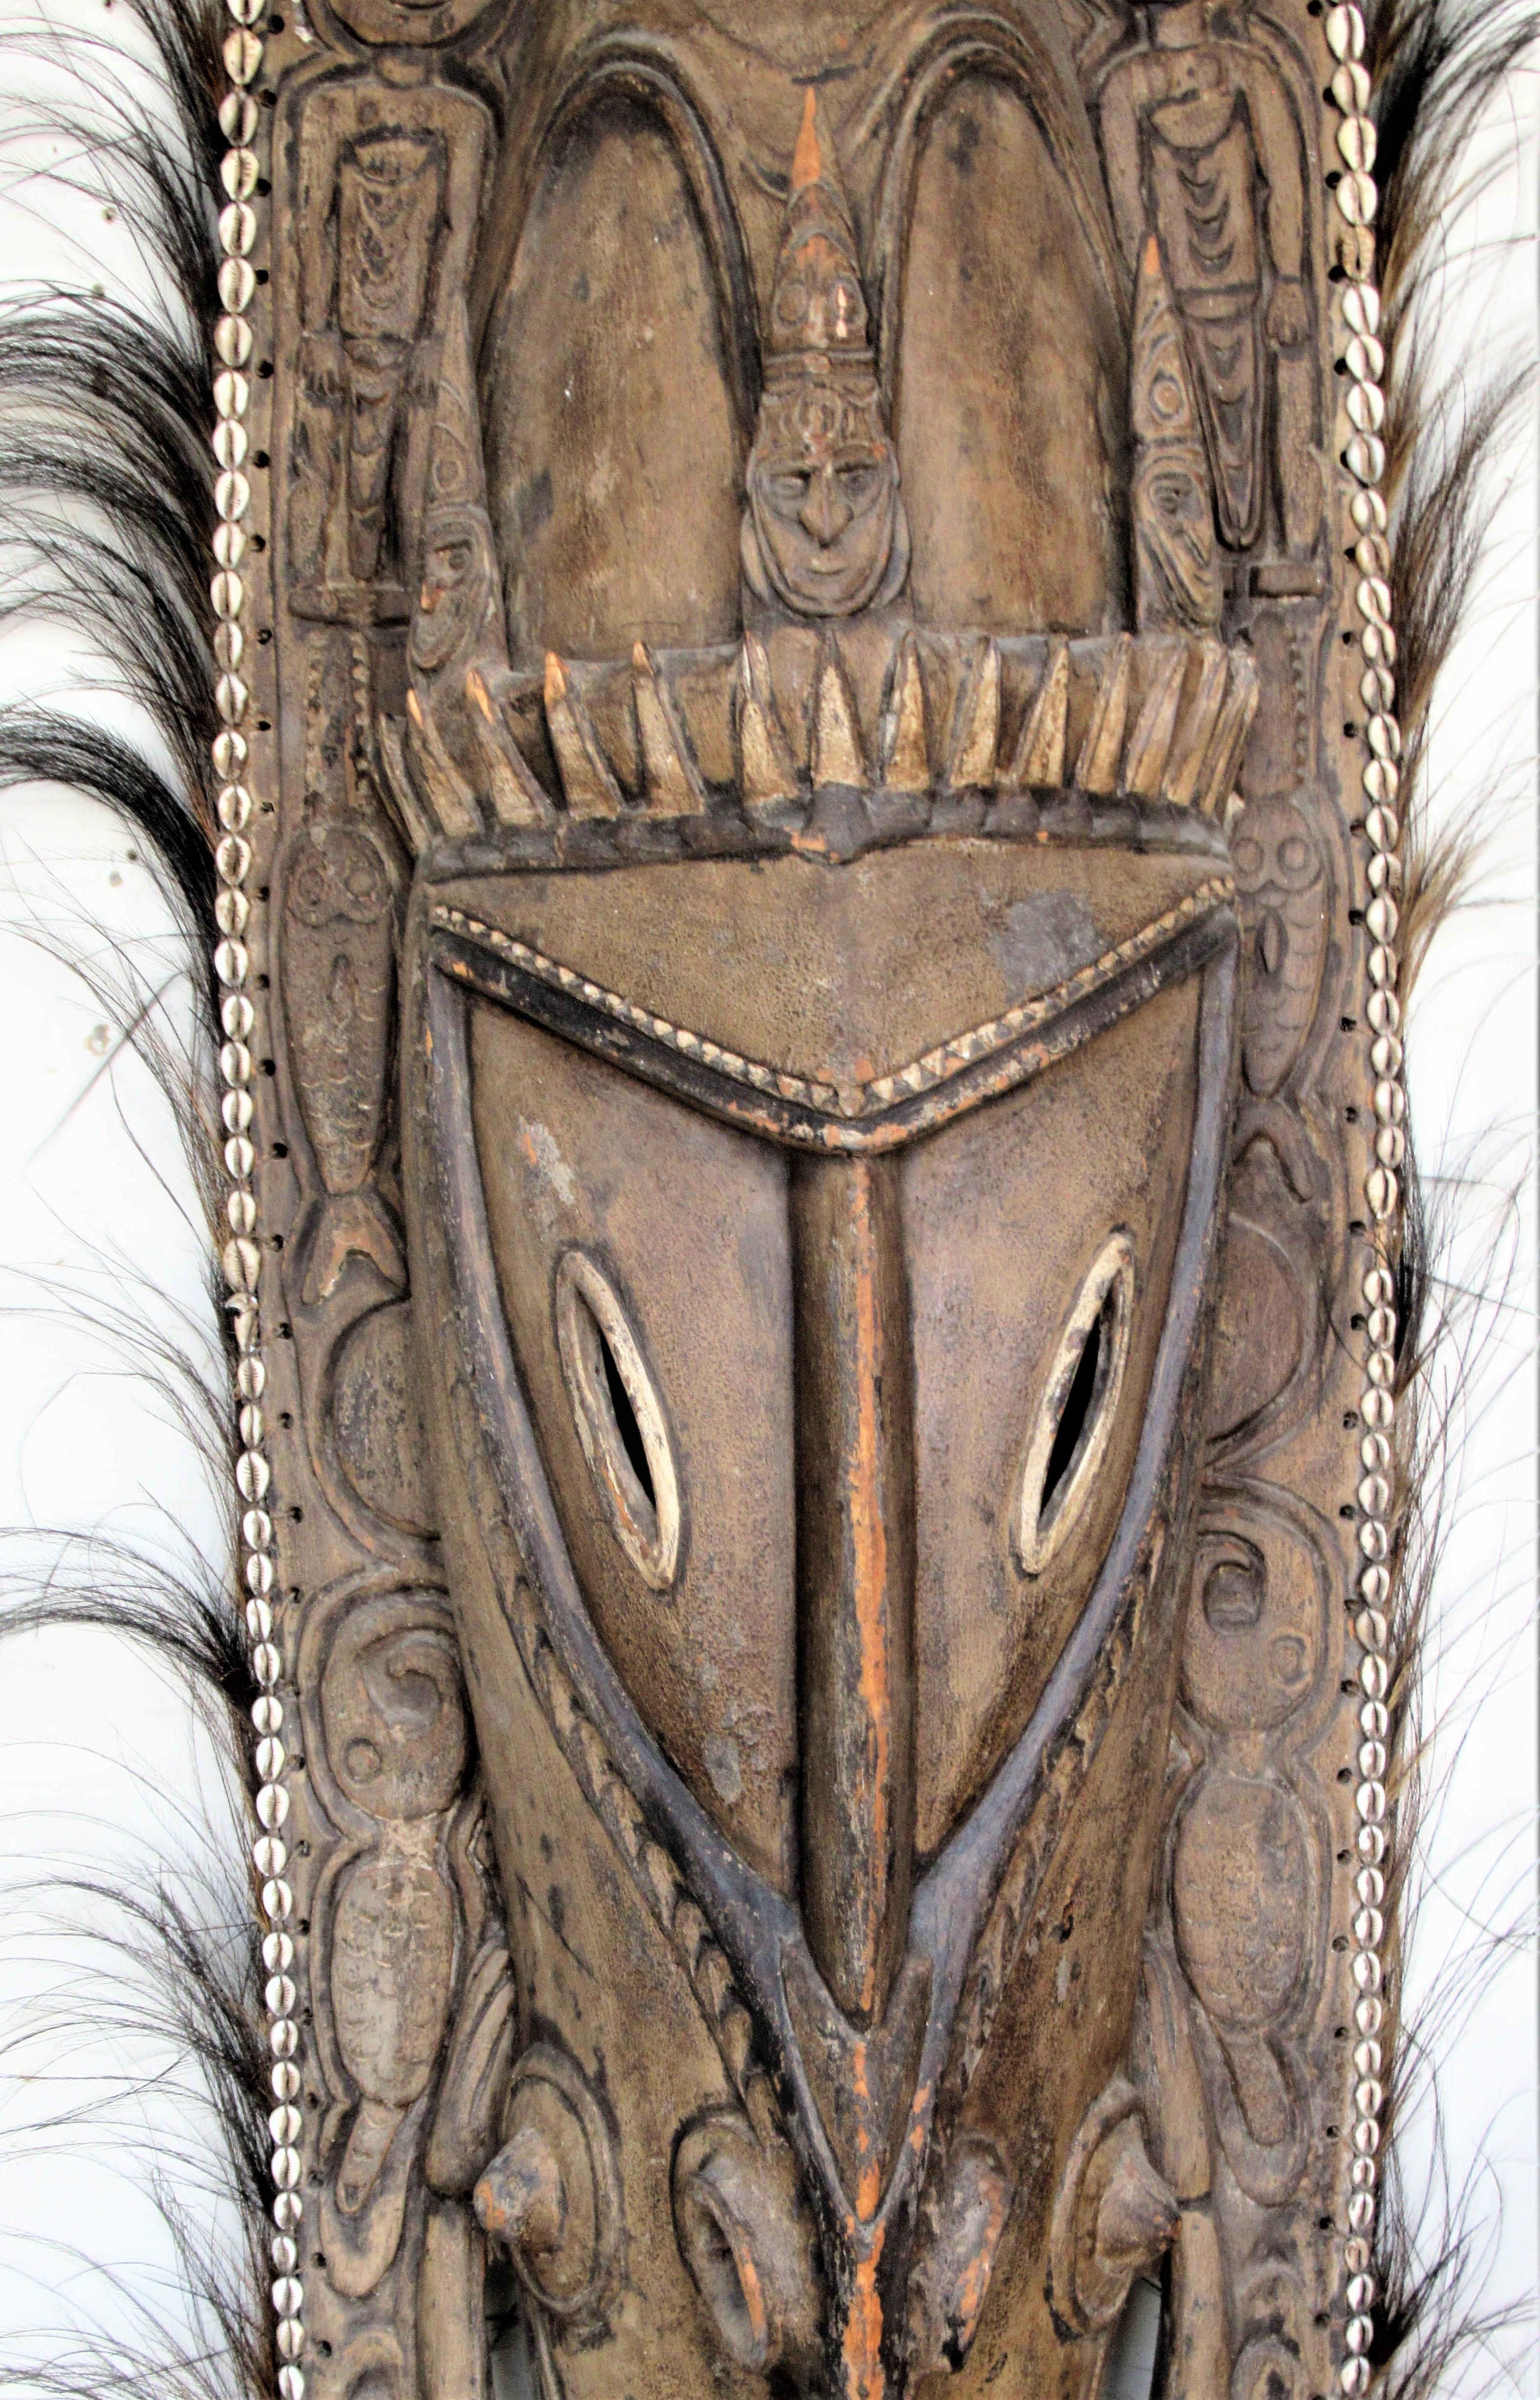 Shell Old Papua New Guinea Men's Sacred Spirit House Totem